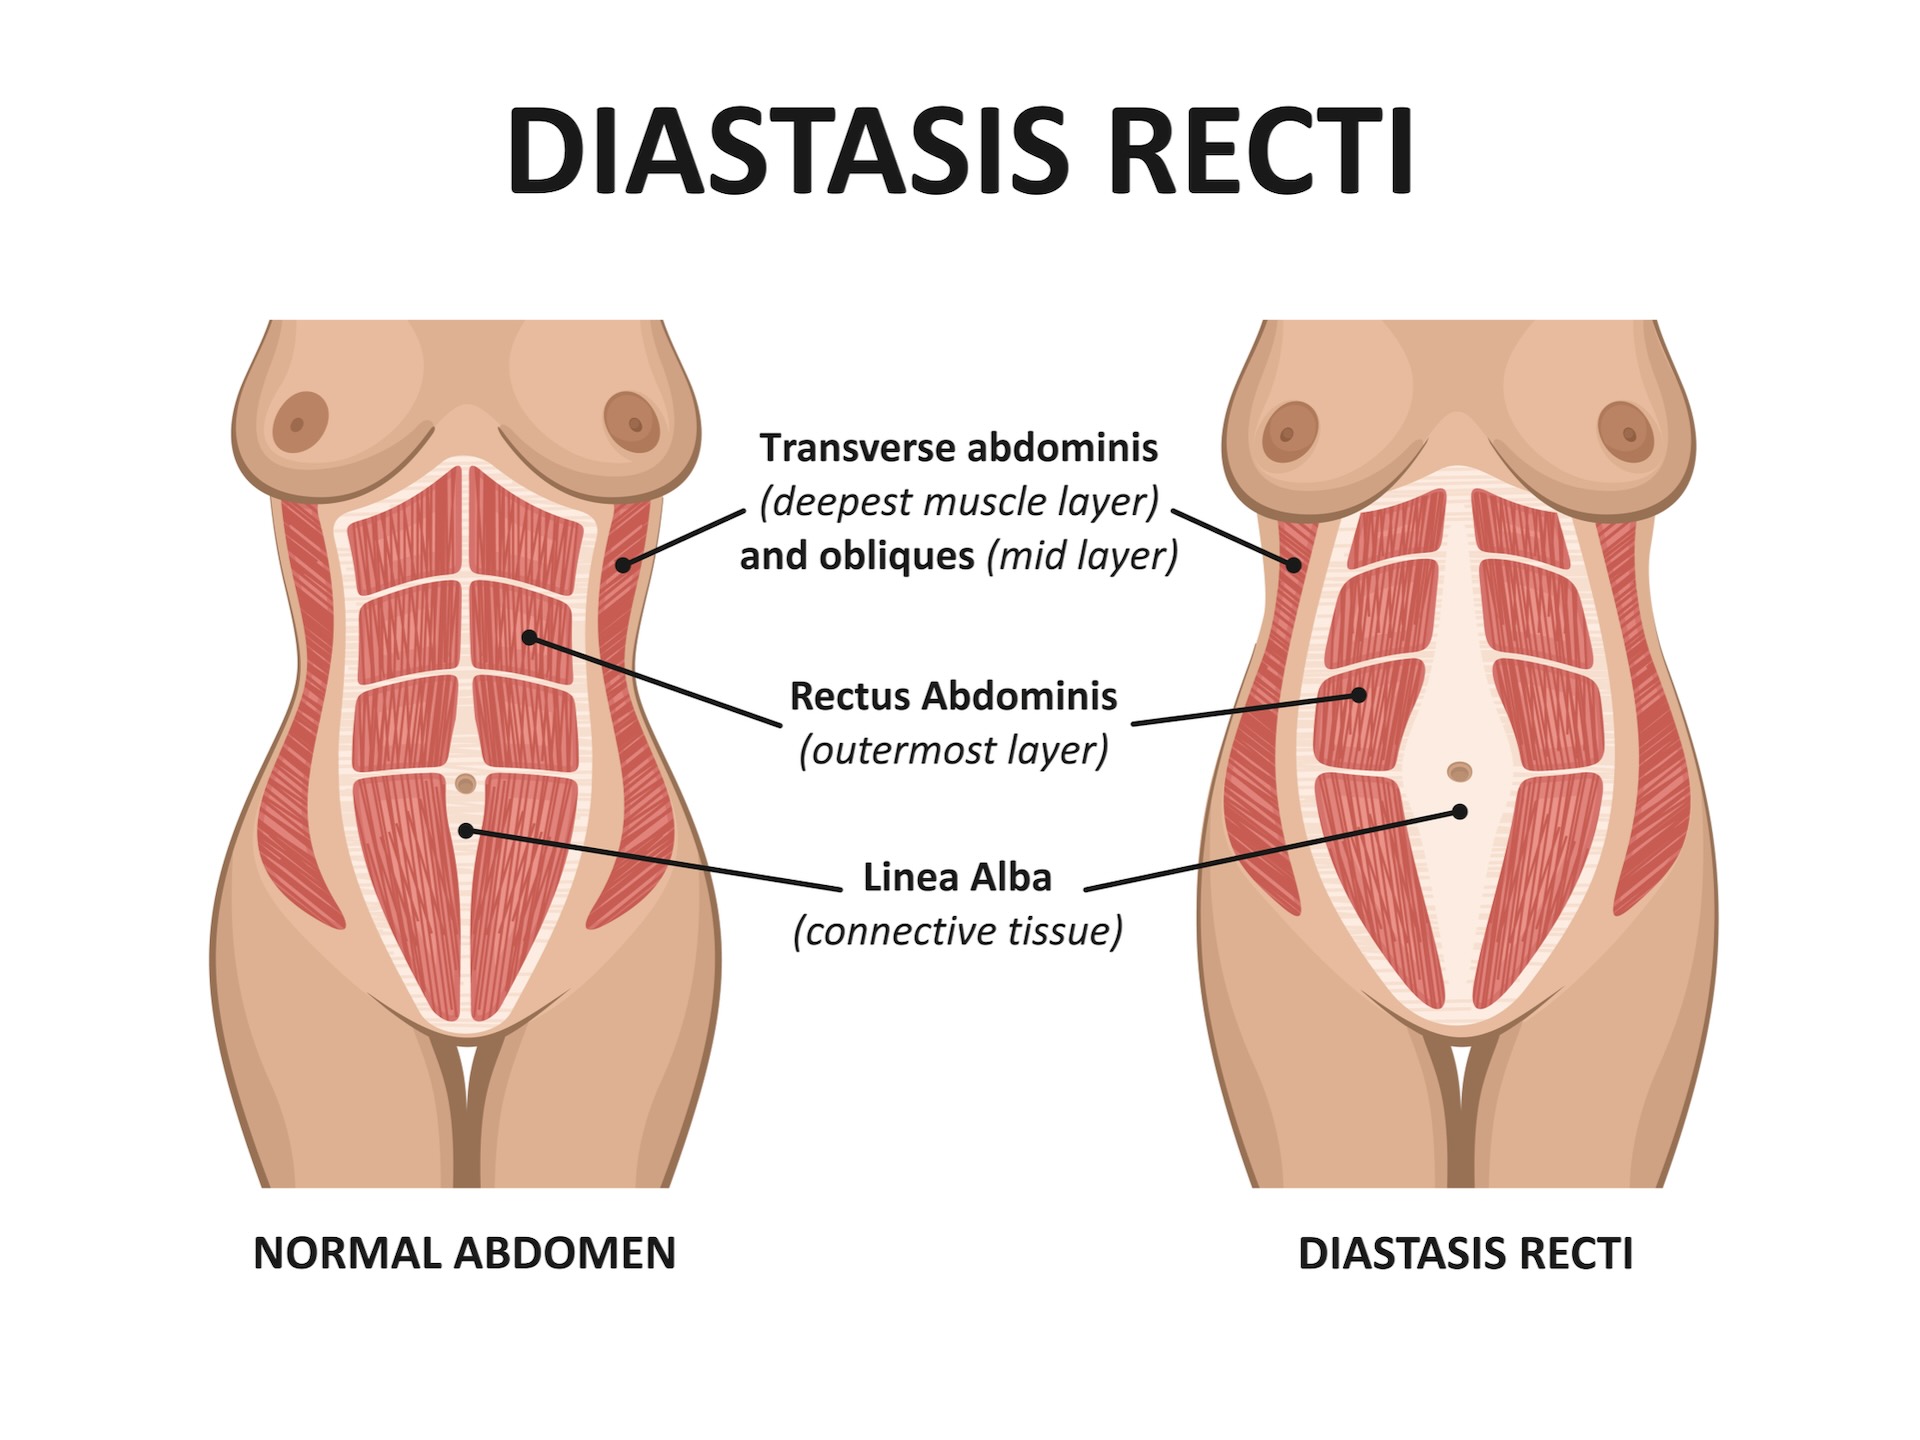 4 Diastasis Recti Exercises That Heal & Strengthen Your Injured Core